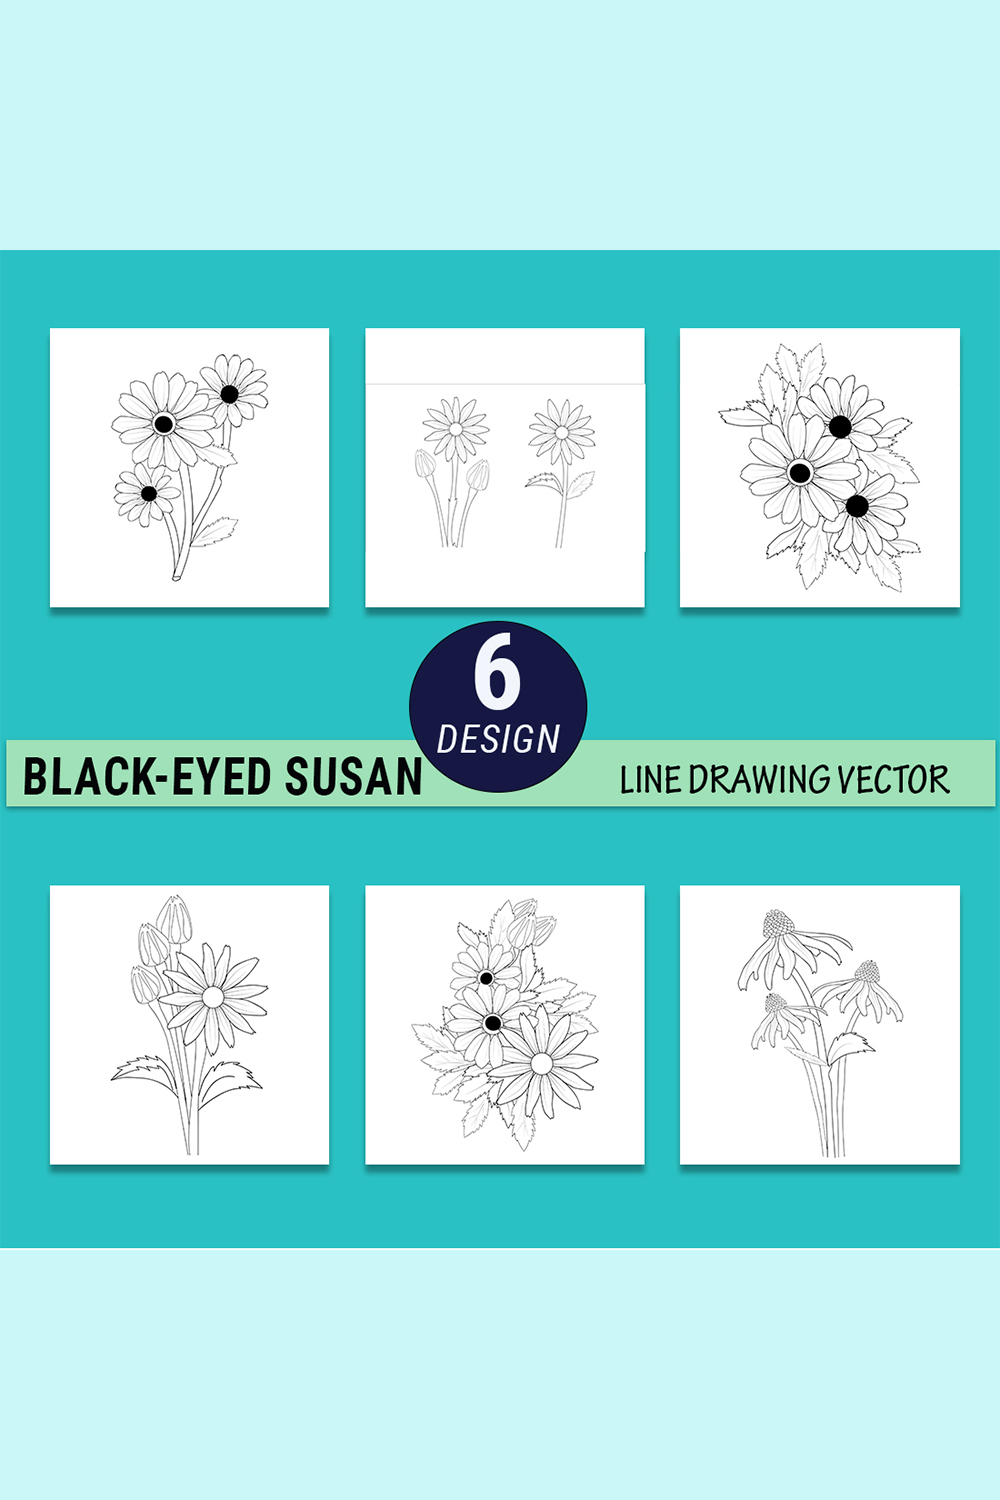 Black-eyed Susan coloring pages, Black-eyed Susan line art, chrysanthemum tattoo design, chrysanthemum tattoo outline, pinterest preview image.